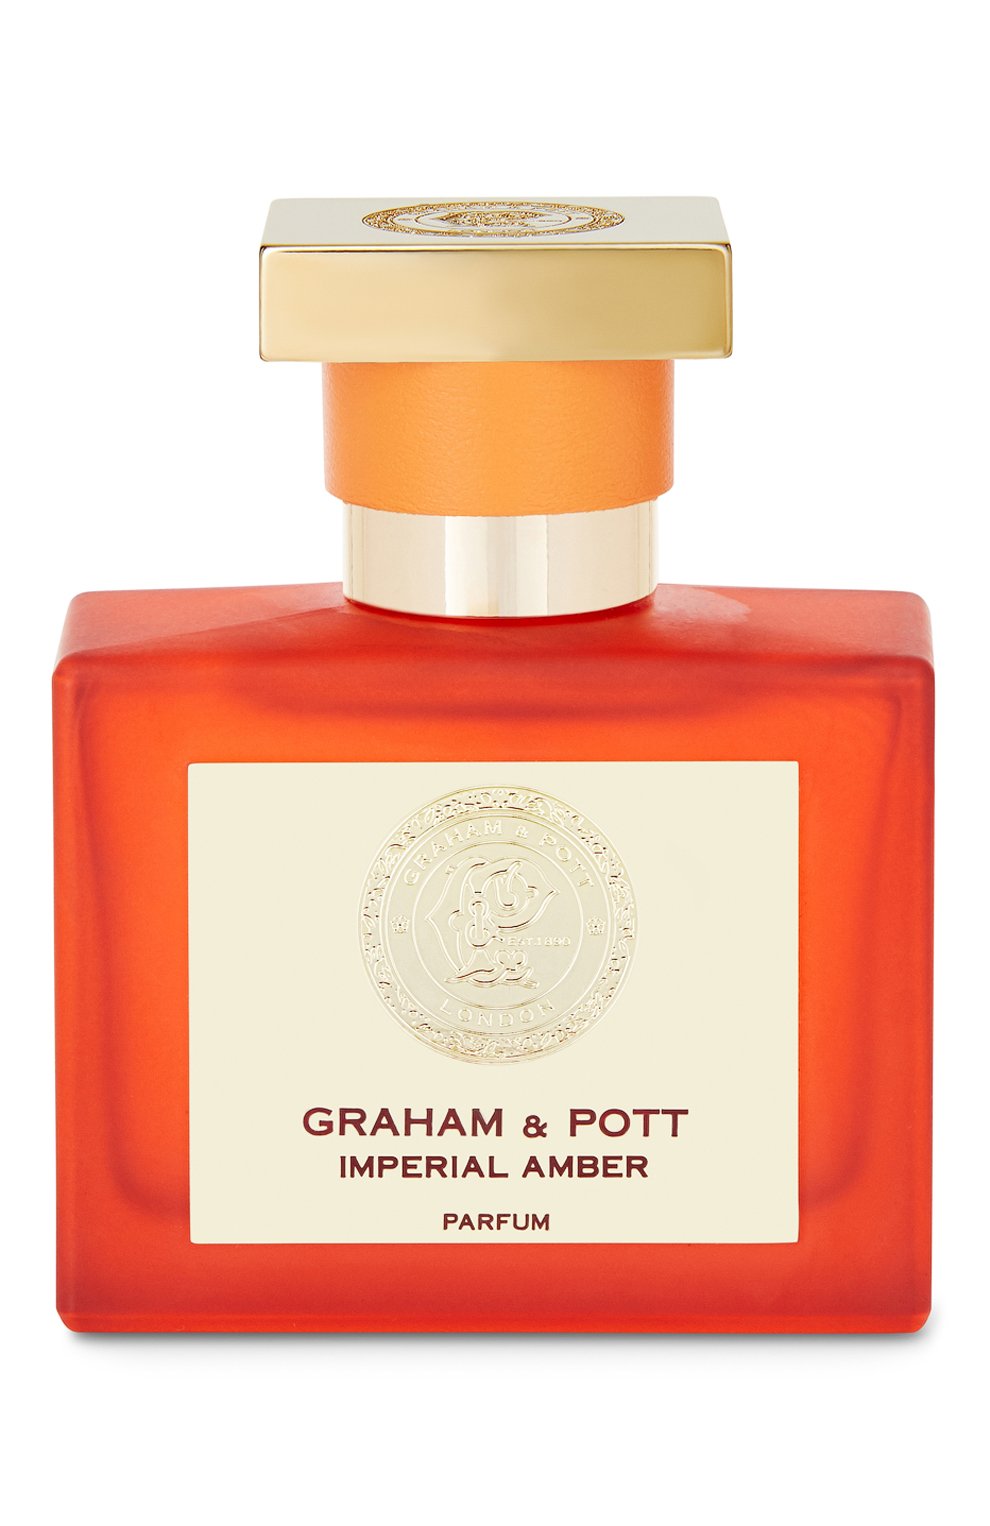 Духи imperial amber (50ml) GRAHAM & POTT бесцветного цвета, арт. 5060729120156 | Фото 1 (Обьем косметики: 100ml; Тип продукта - парфюмерия:  Духи; Ограничения доставки: flammable)